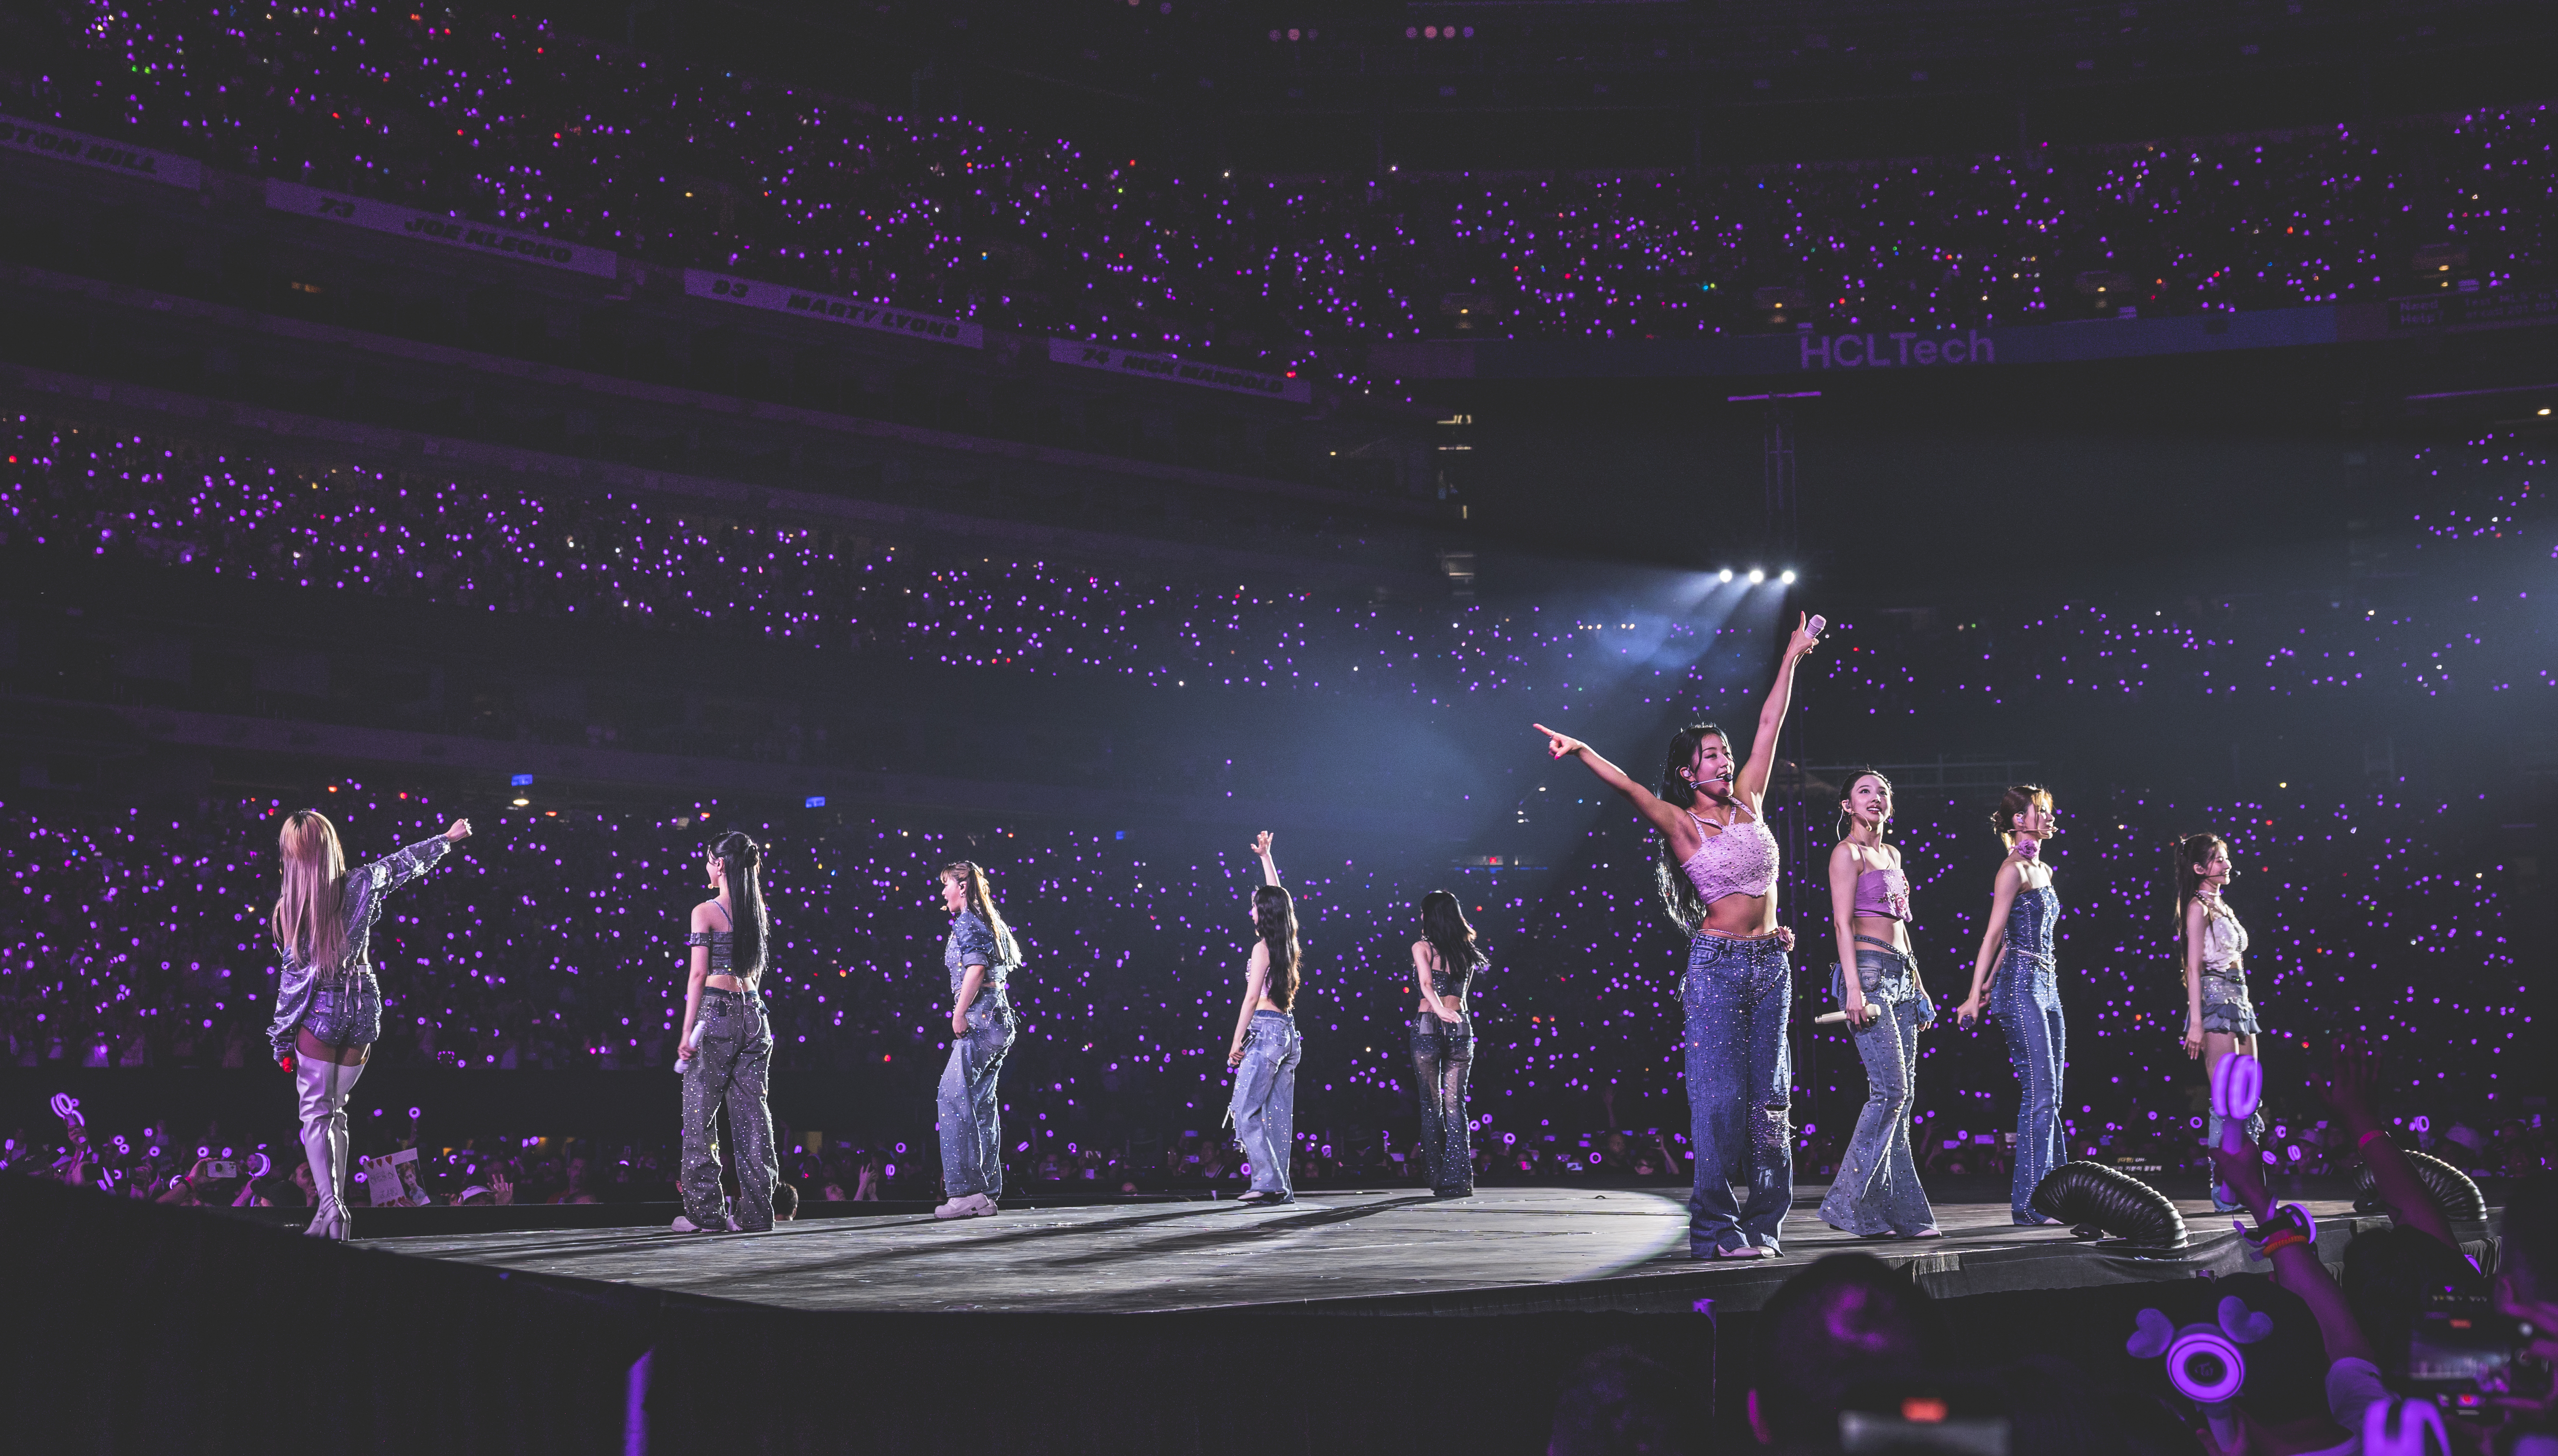 TWICE MetLife Stadium N.J. concert review: K-pop sensation erupts